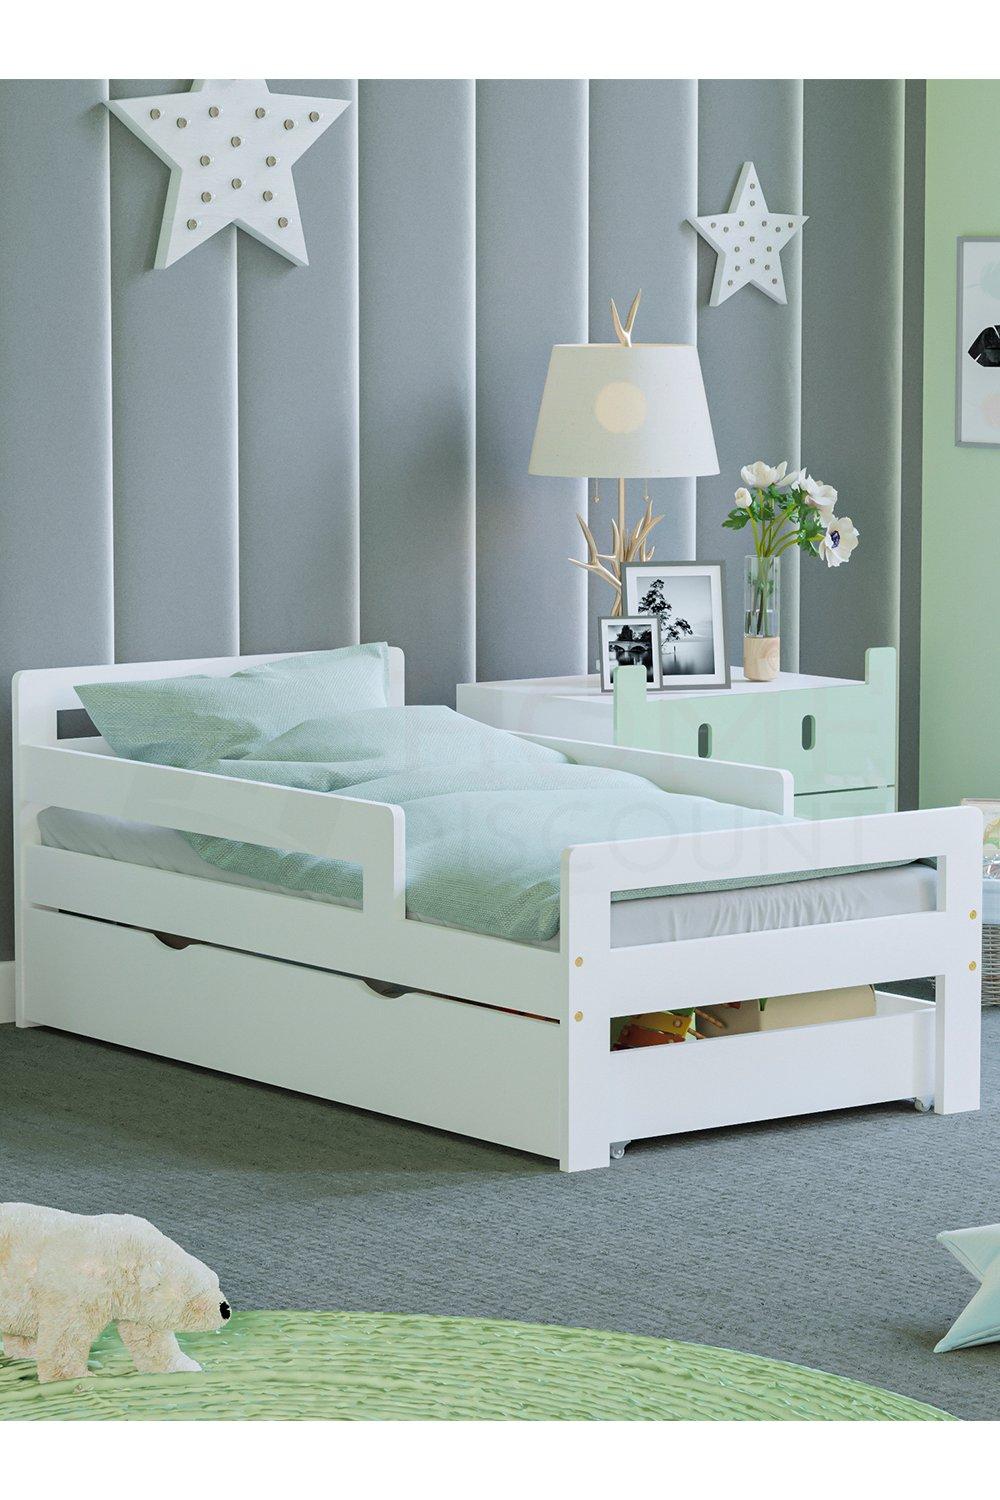 Junior Vida Taurus Toddler Bed With Storage Children Kids Bedroom Furniture